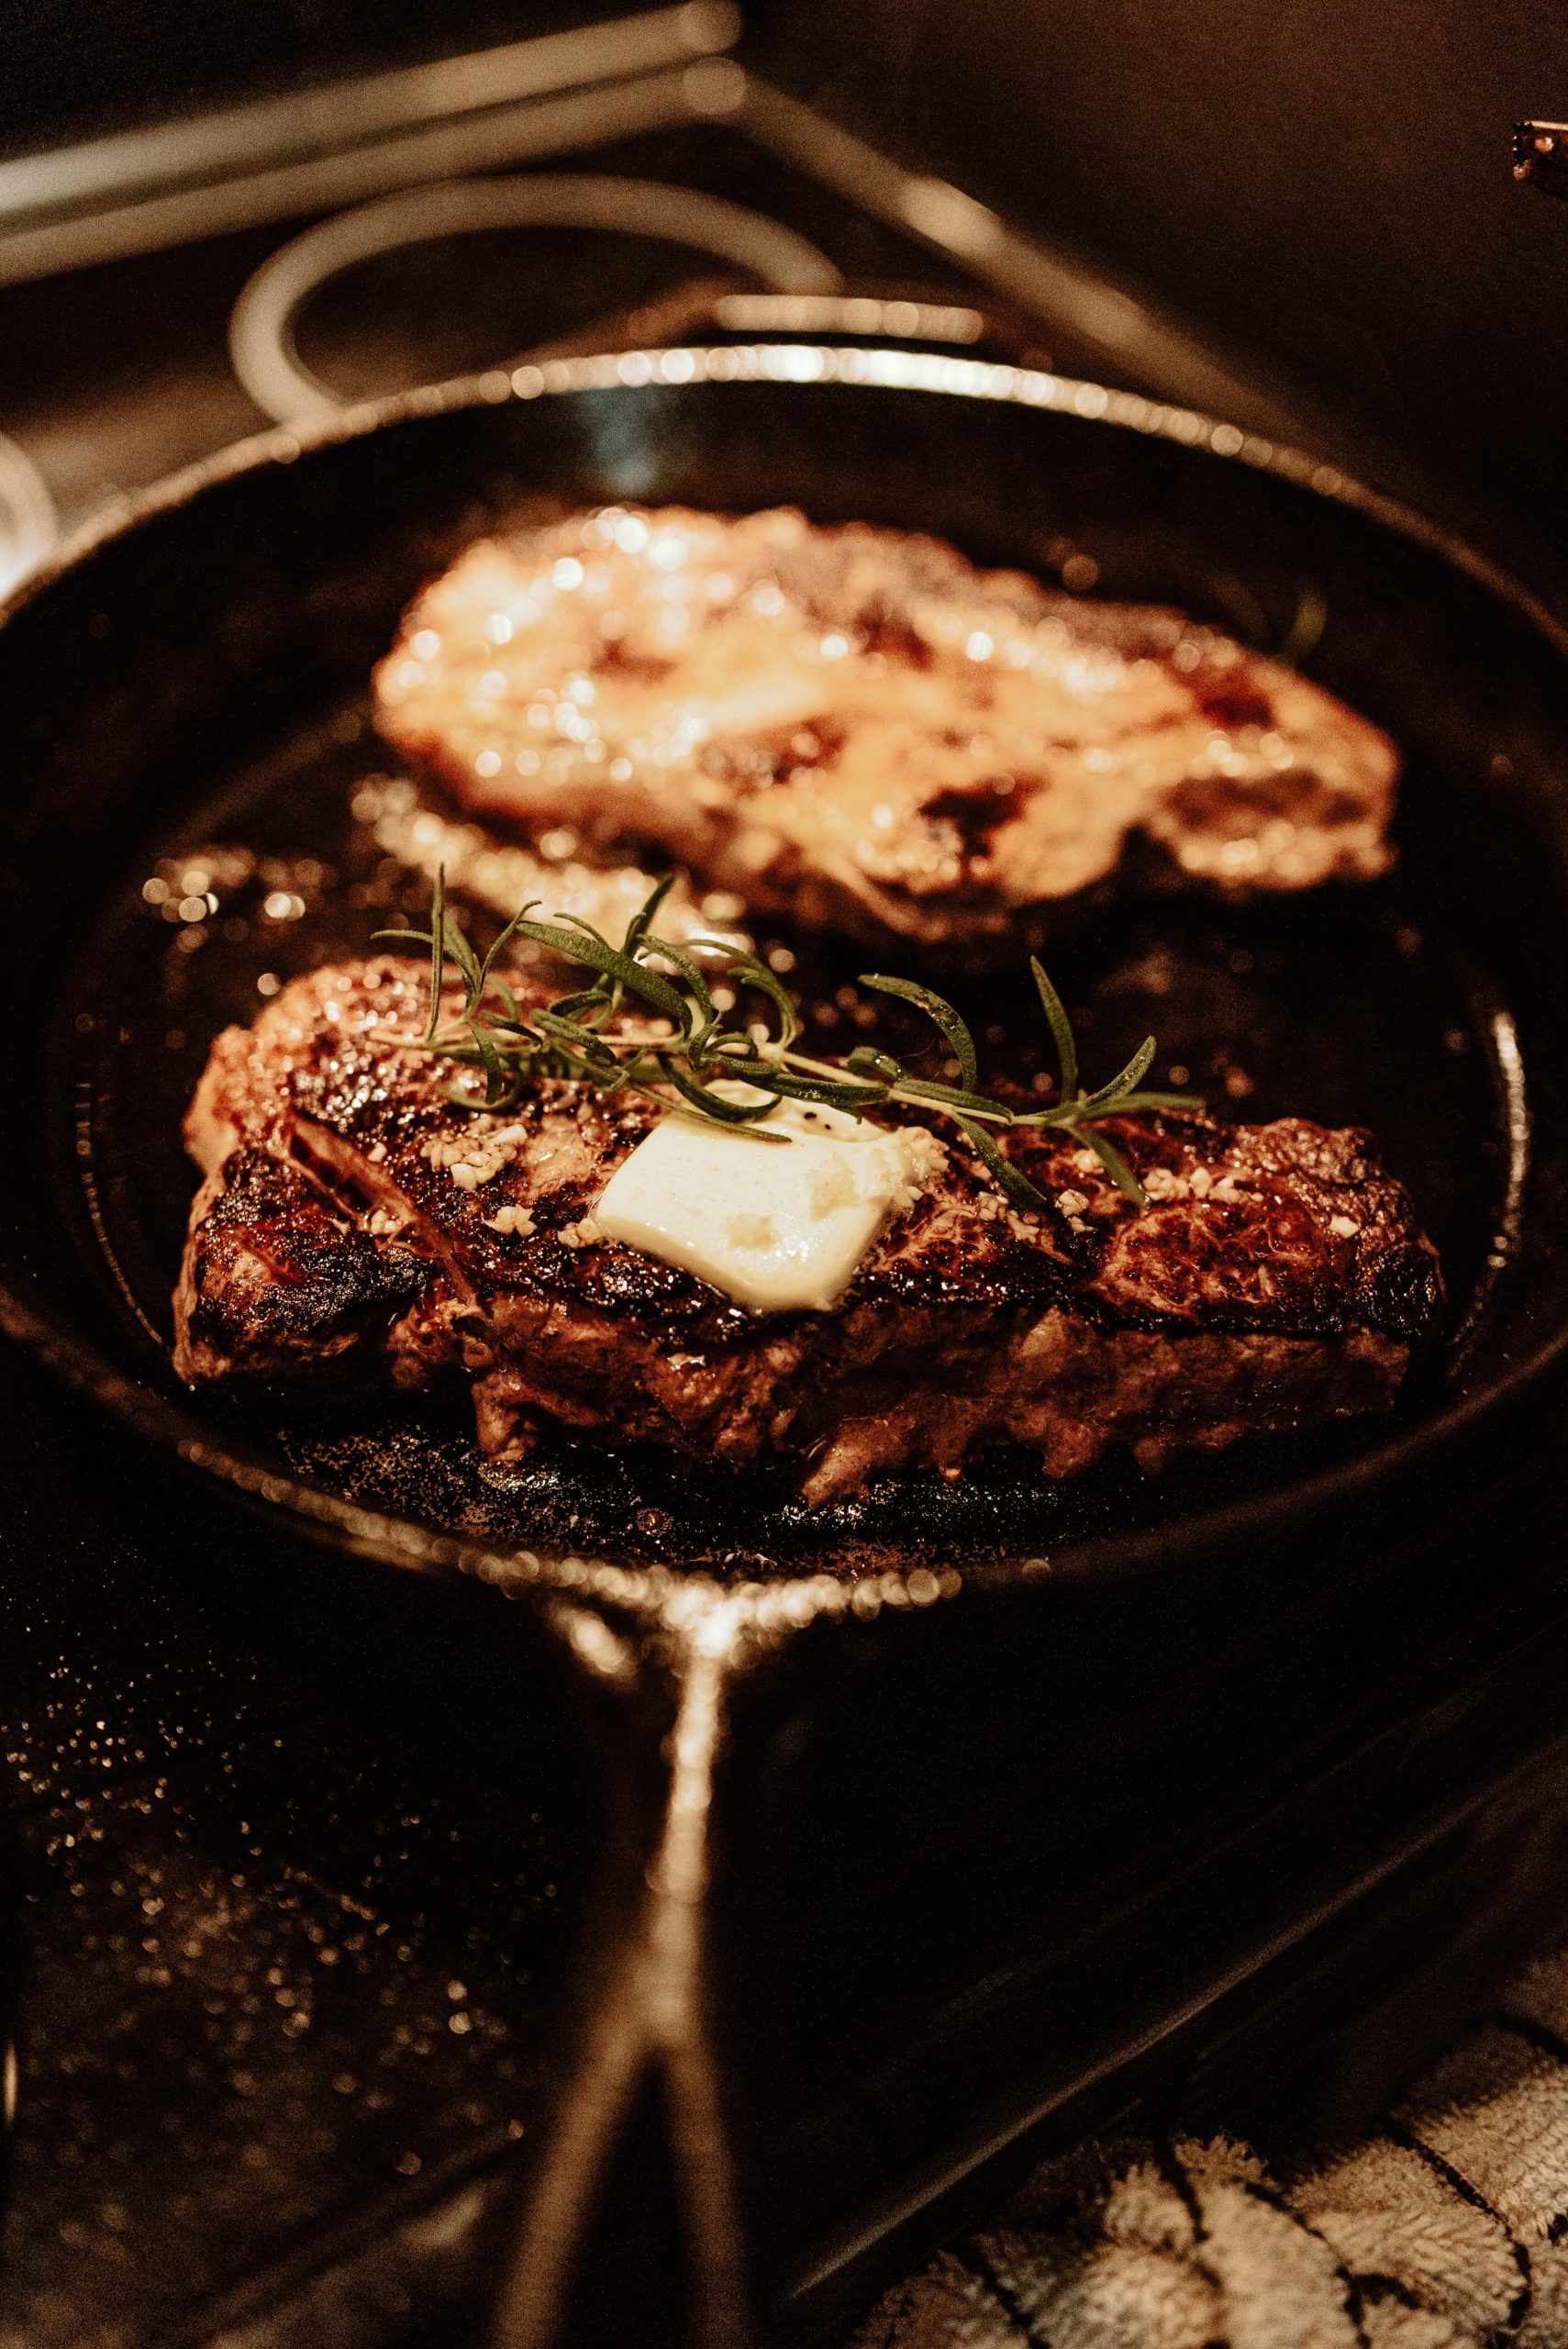 Date Night: Ultimate Steak-cation Class February 14th